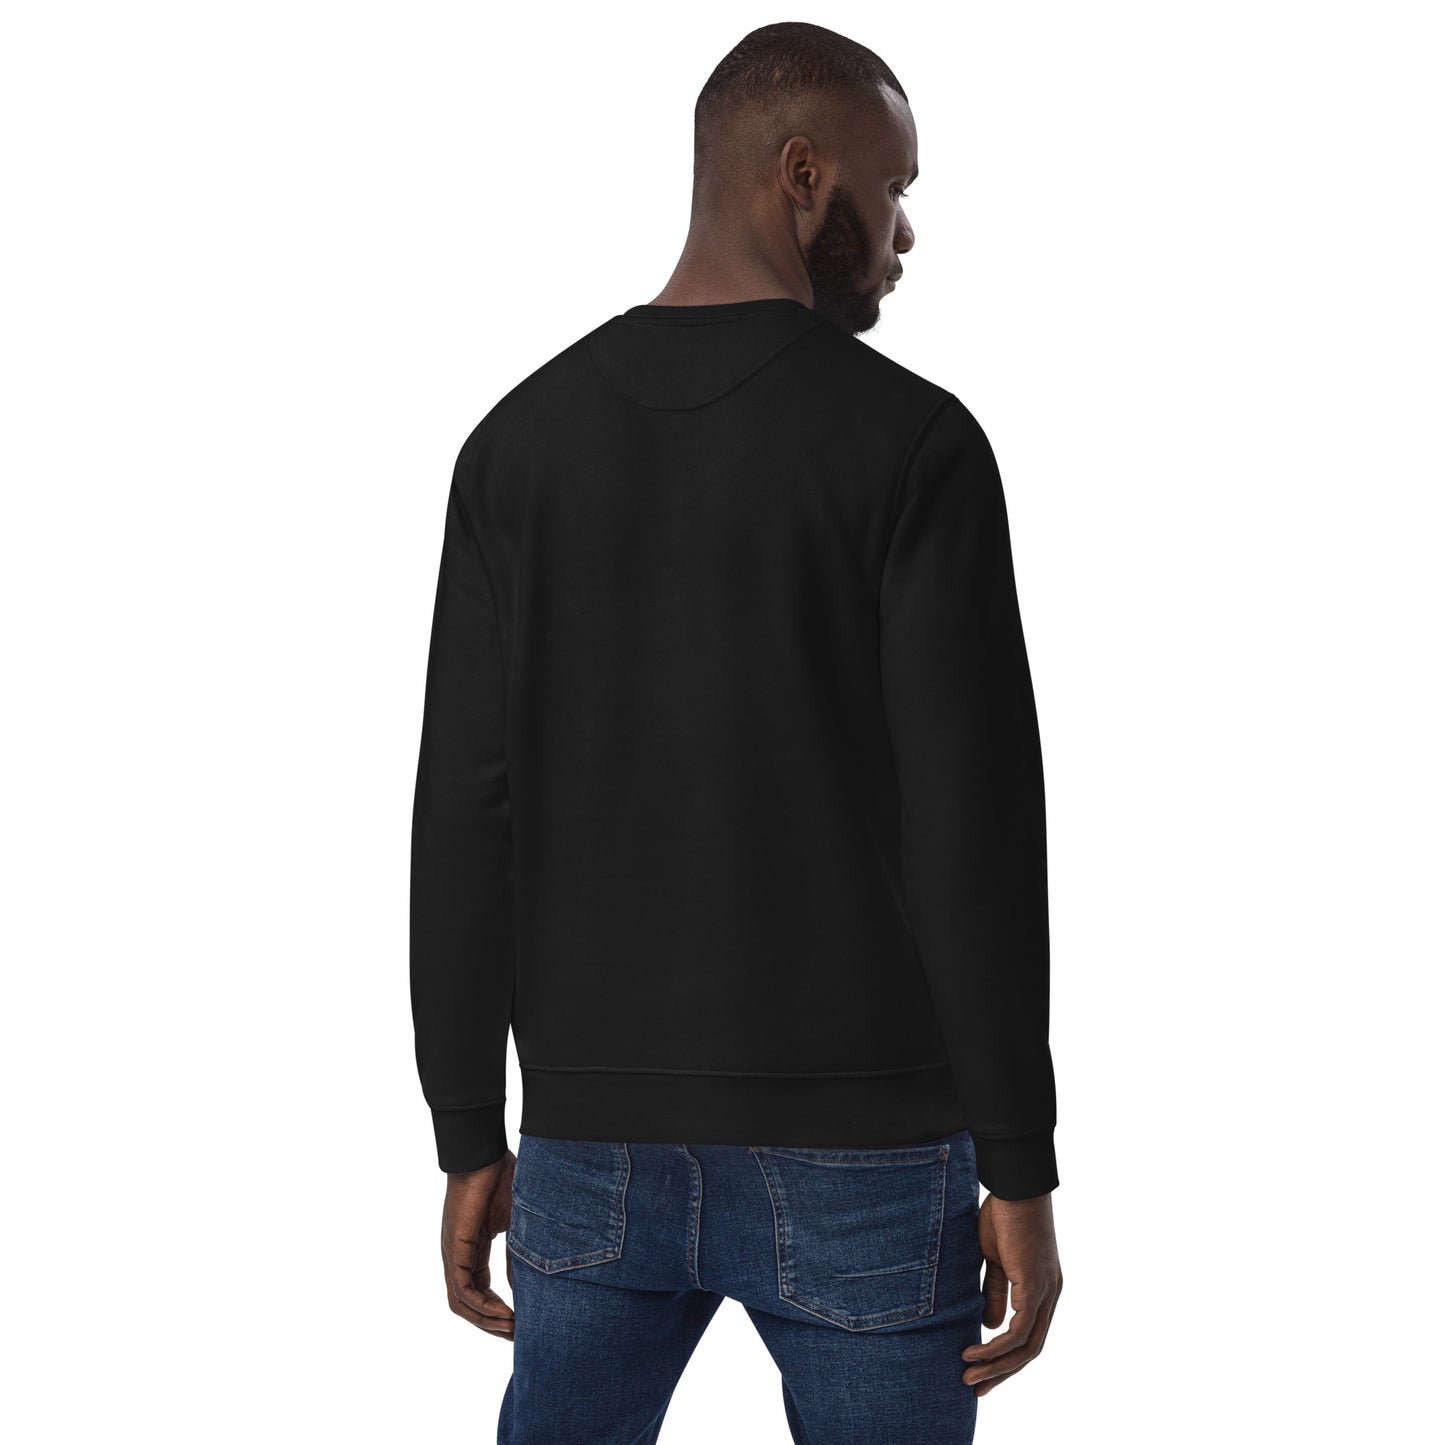 TE007.1 - Unisex Bio-Pullover - Sweater - Sweatshirt - Social Media Trend - Ya Wisikh 1 - white logo